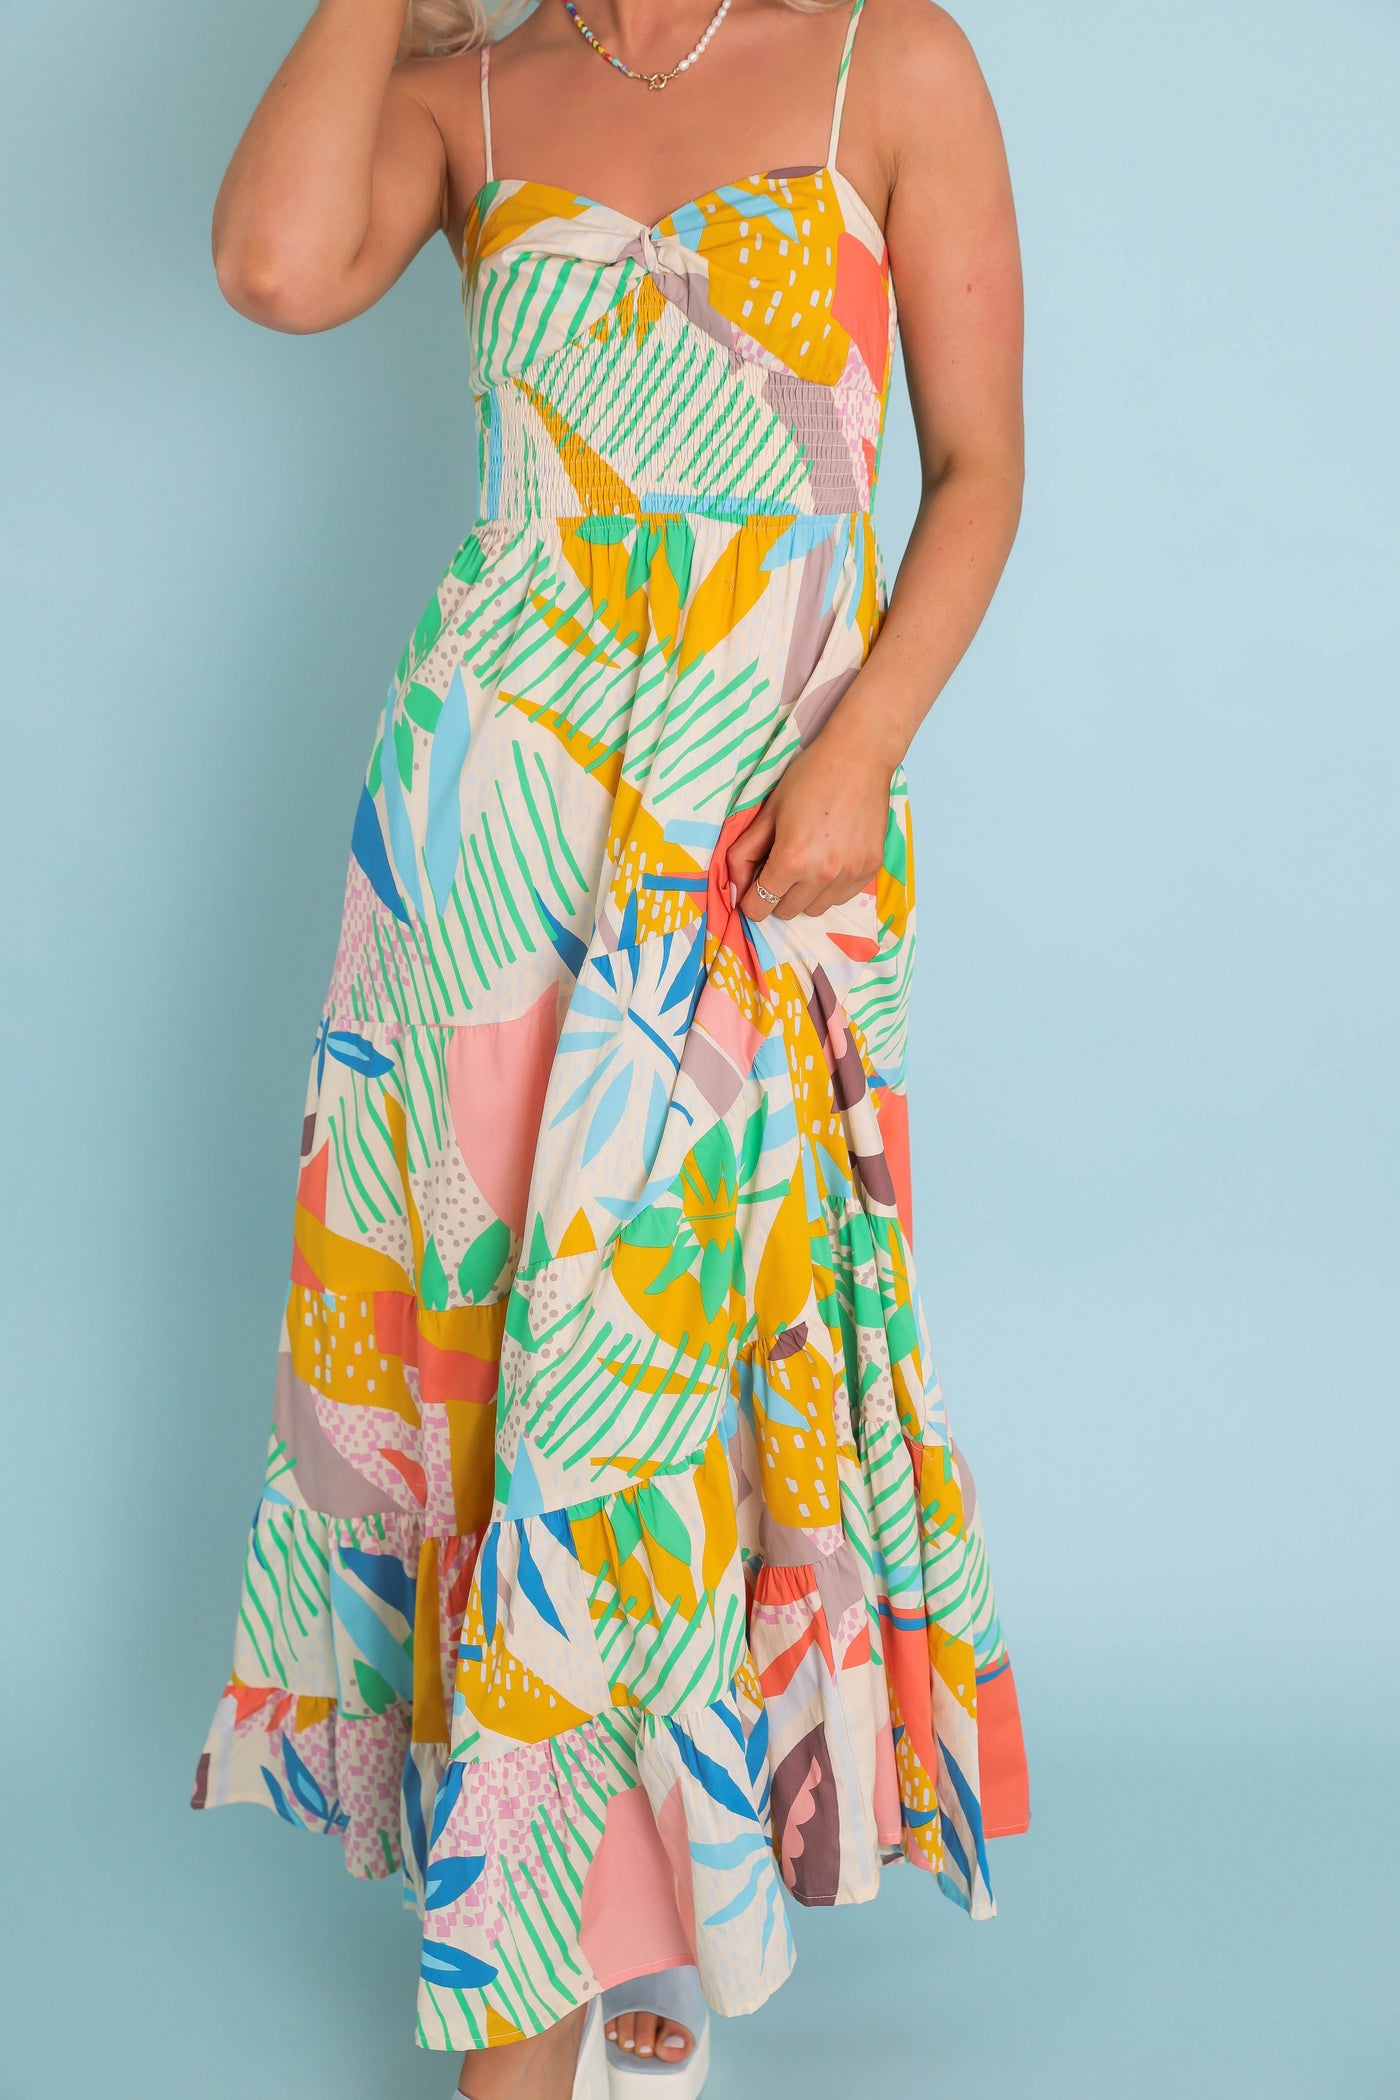 Women's Tropical Print Maxi Dress- Women's Colorful Vacation Dresses- FATE Maxi Print Dress